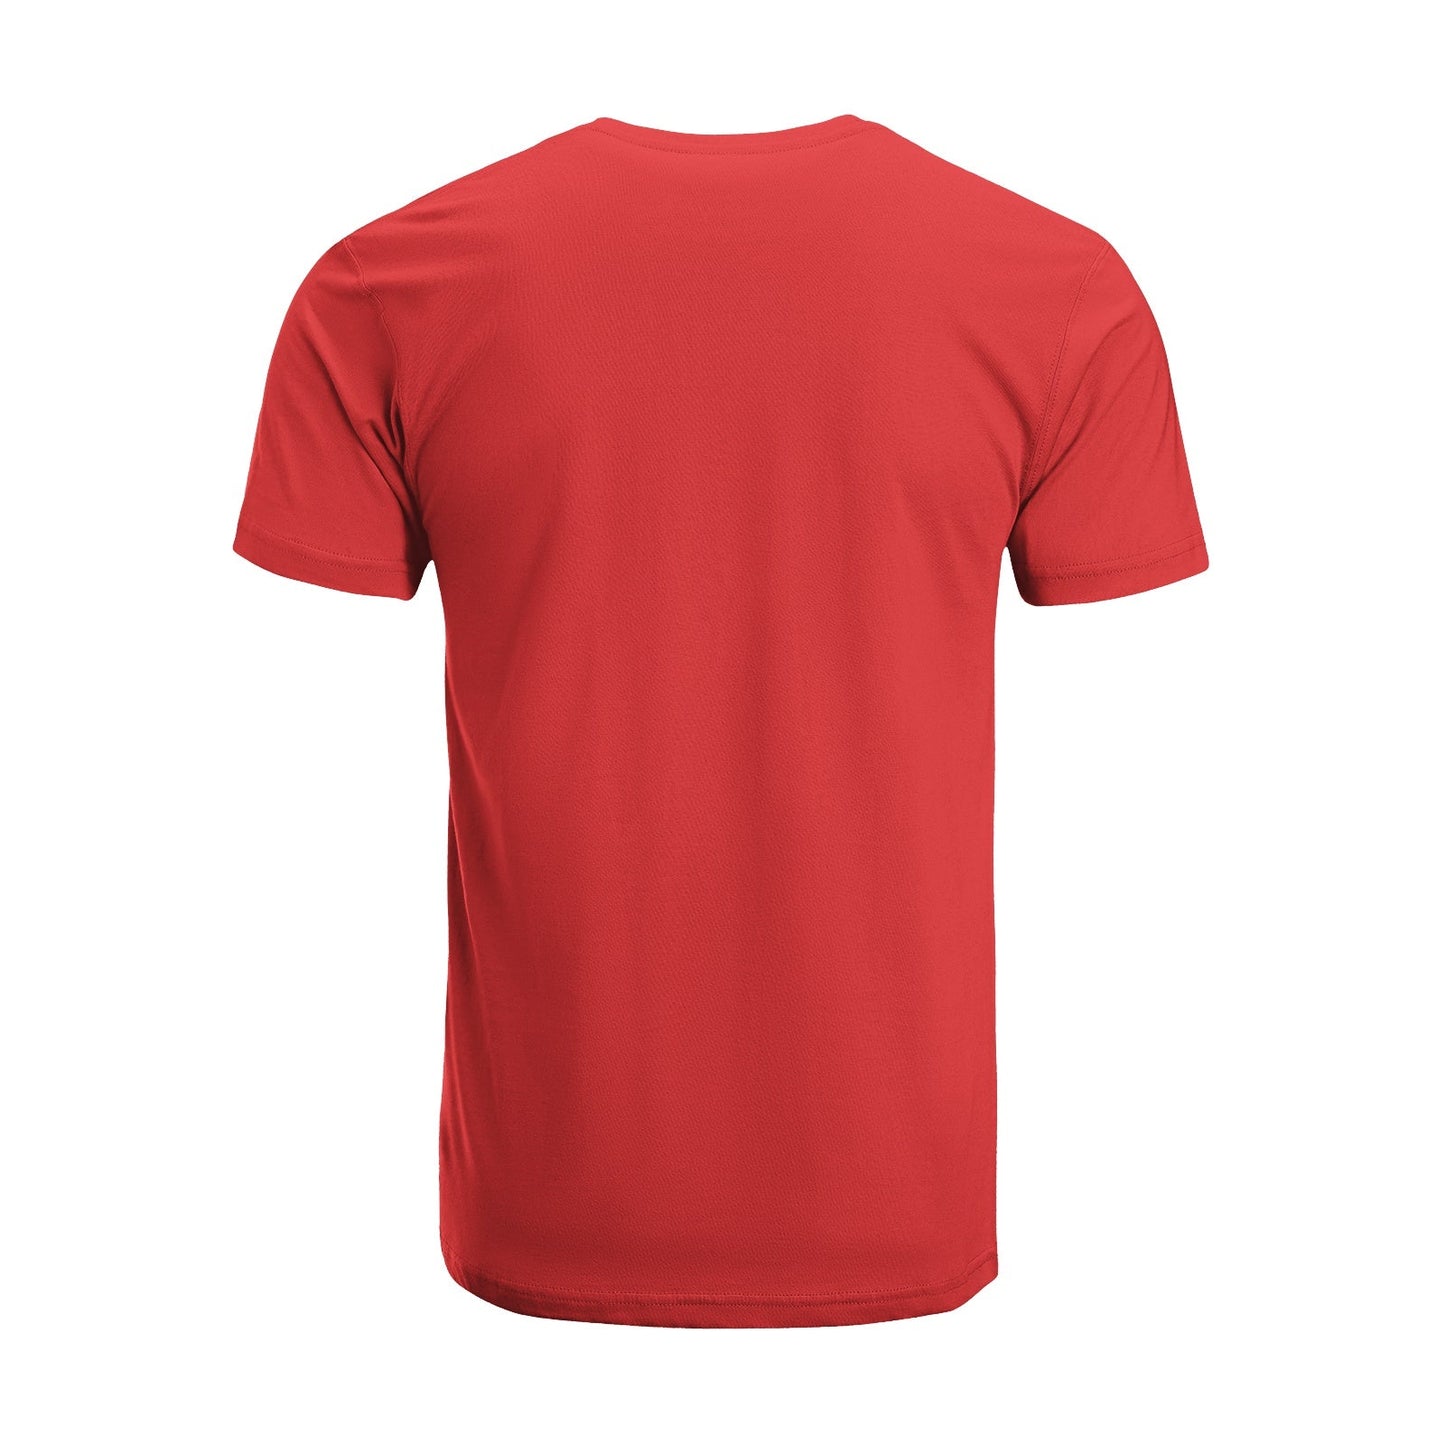 Unisex Short Sleeve Crew Neck Cotton Jersey T-Shirt VEGAN 28